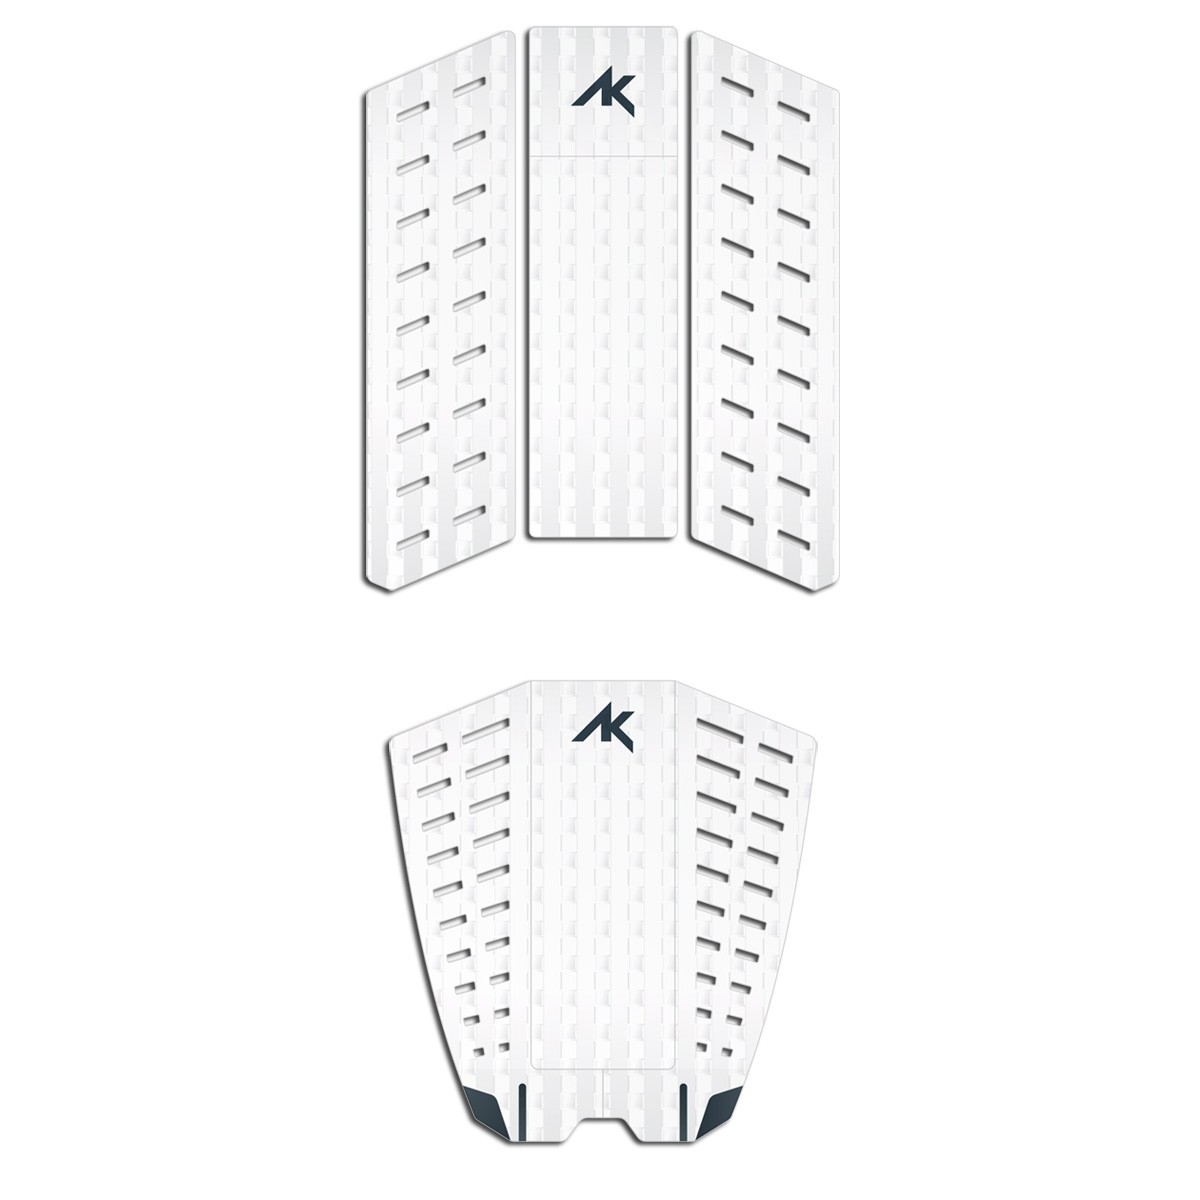 AK Durable deck pads